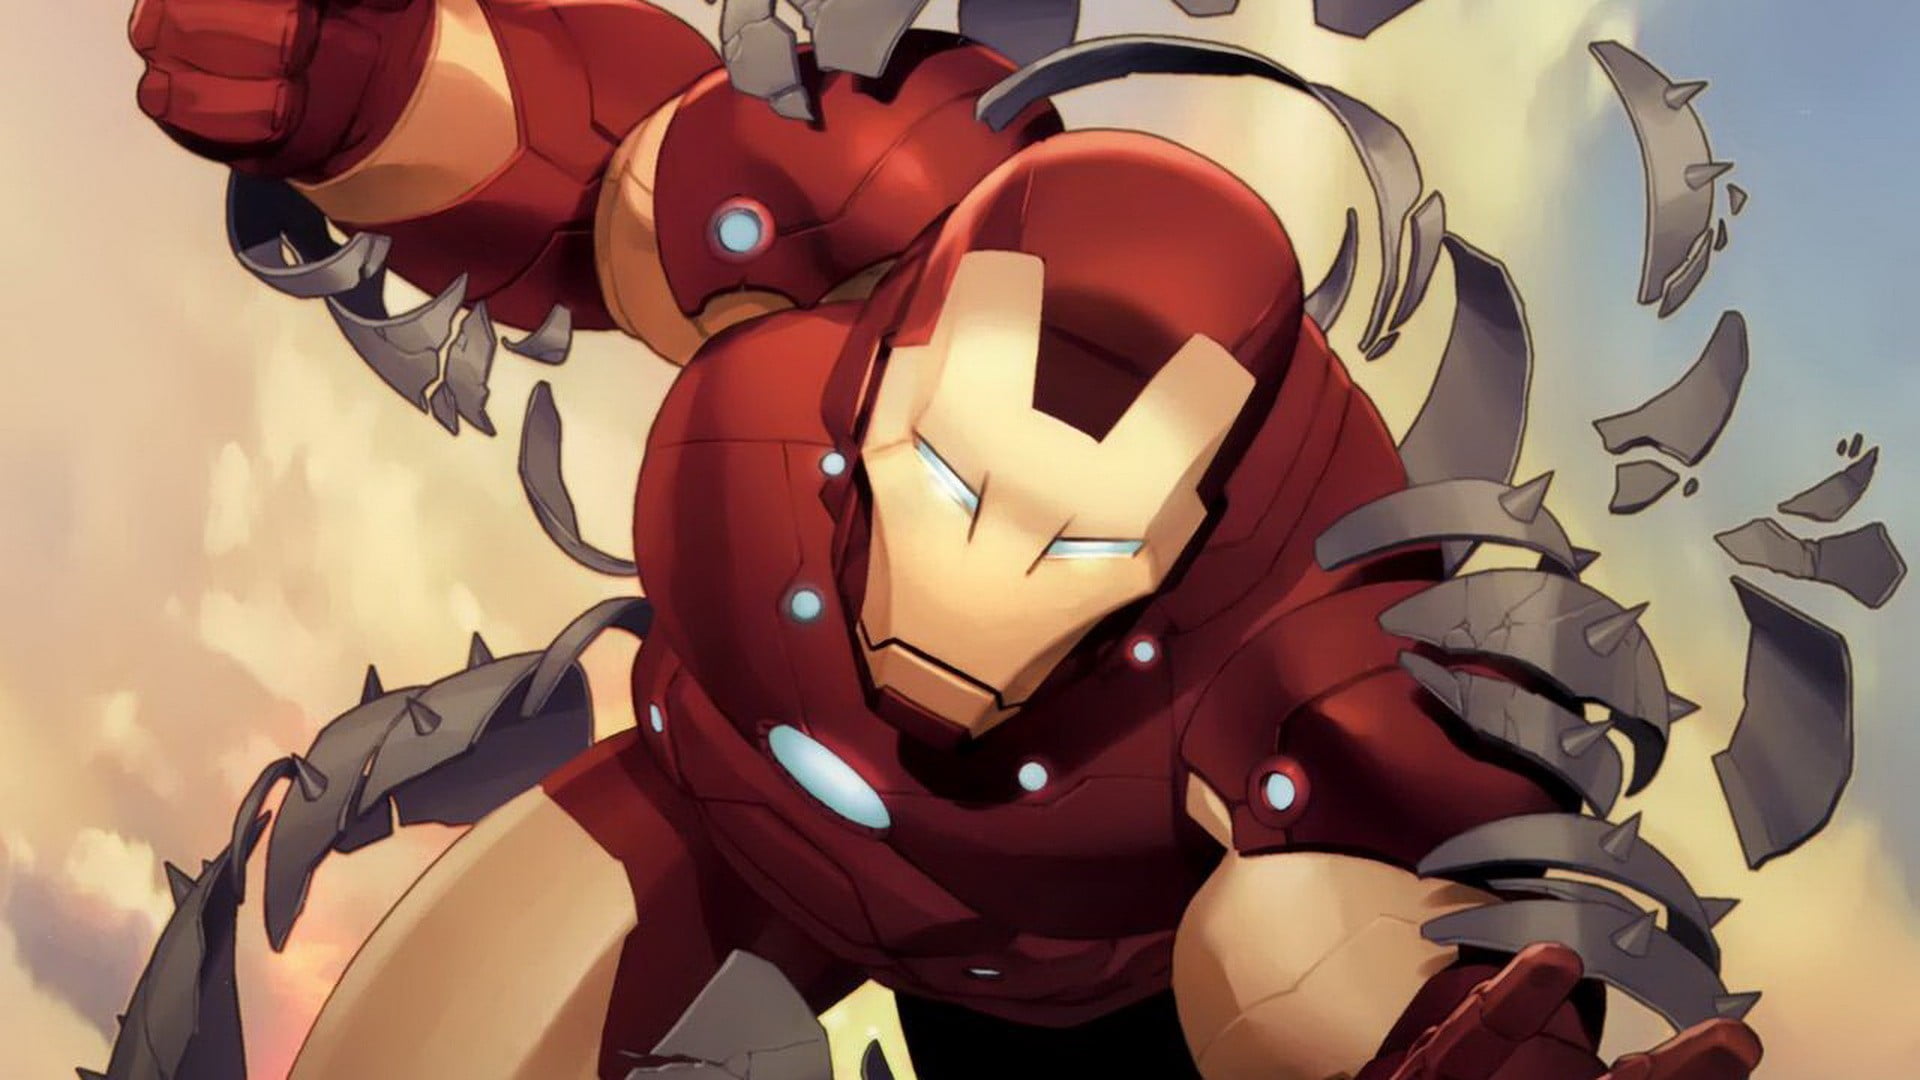 Iron Man wallpaper, Marvel Comics, superhero, sky, headwear, red